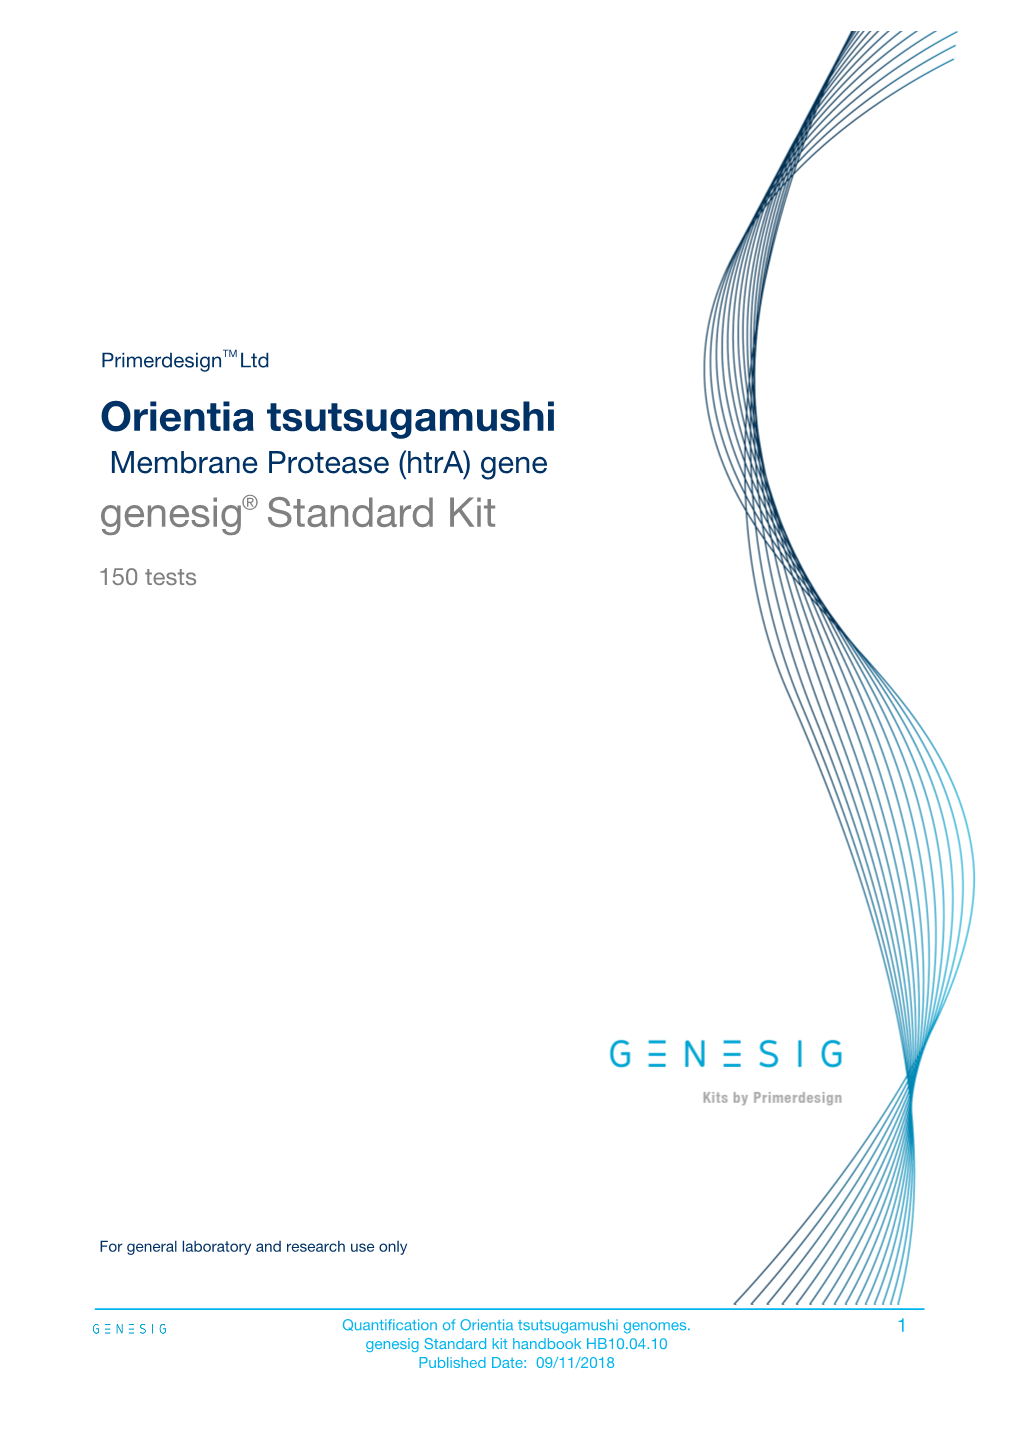 Orientia Tsutsugamushi Genesig Standard